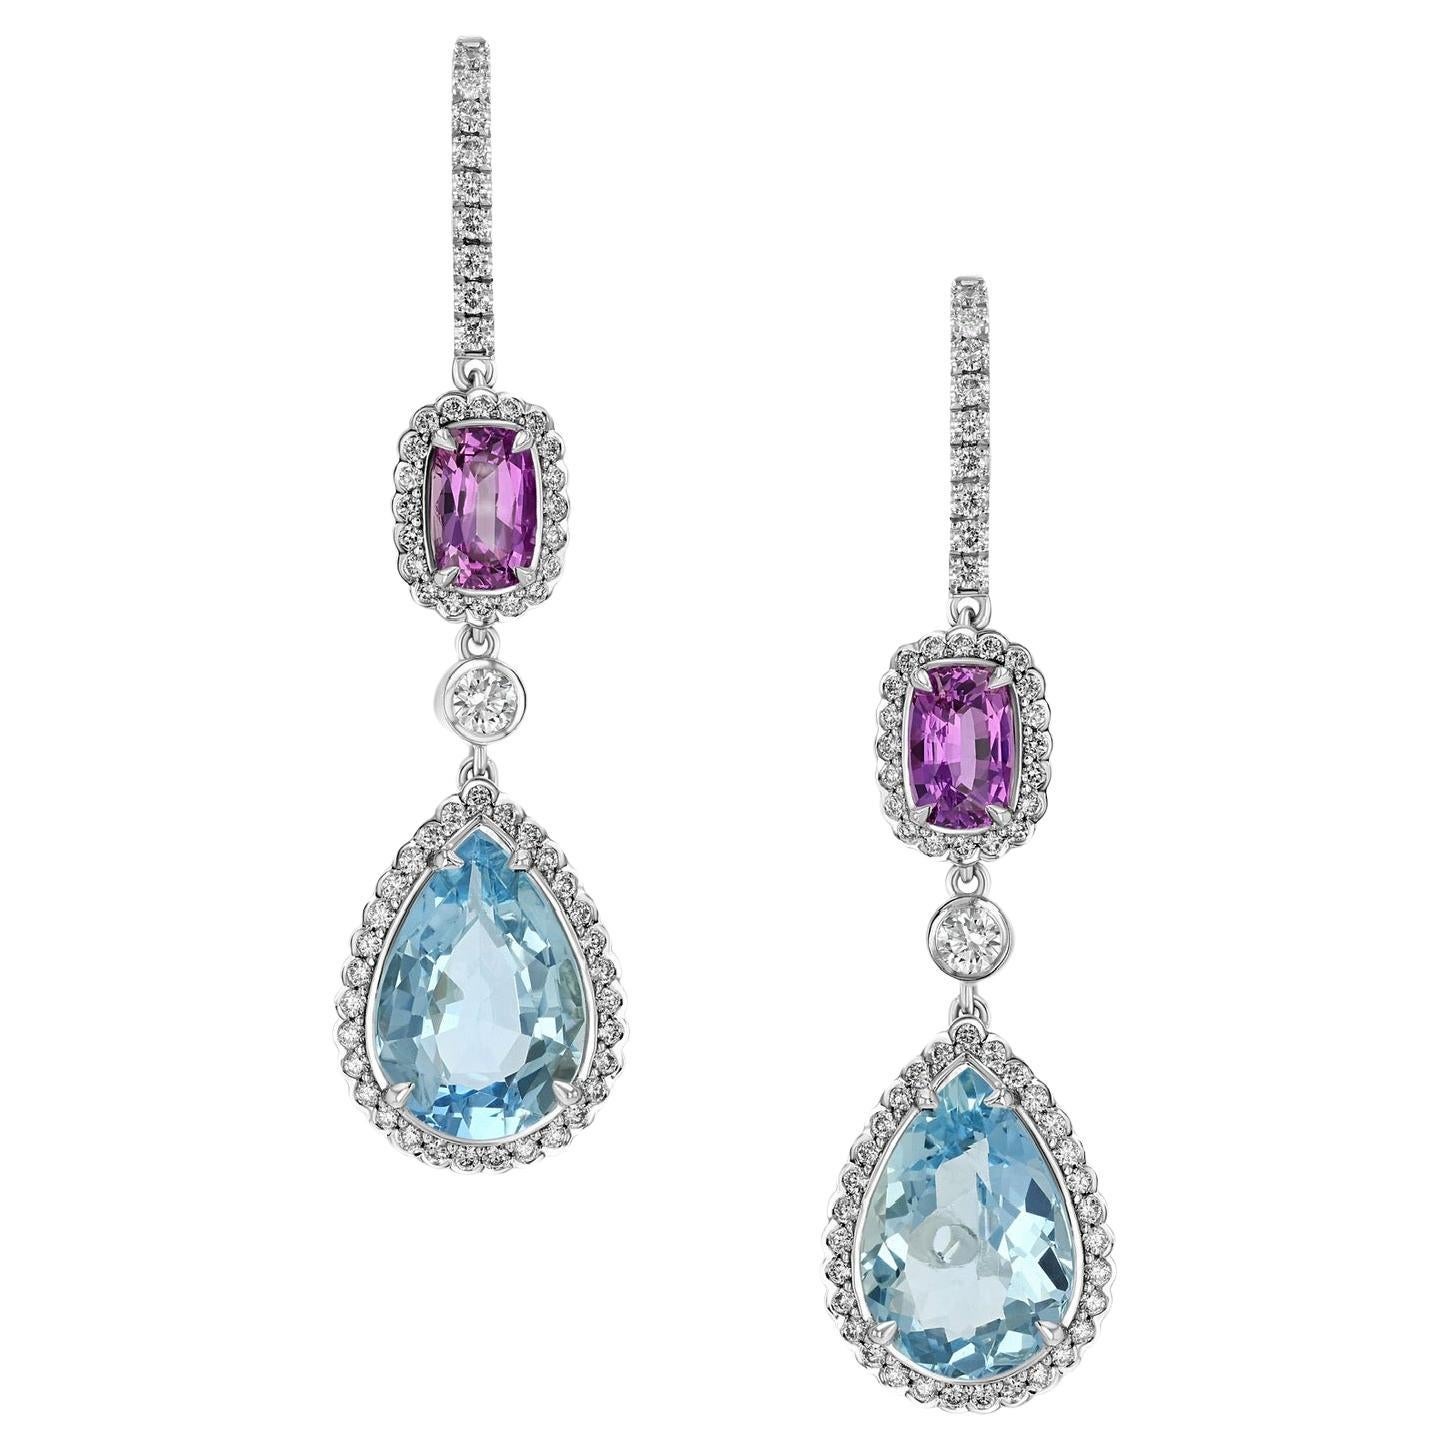 9.71ct pear-cut Aquamarine, 2.83ct Pink Sapphire, 1.32ct Diamond, 18K earrings. For Sale